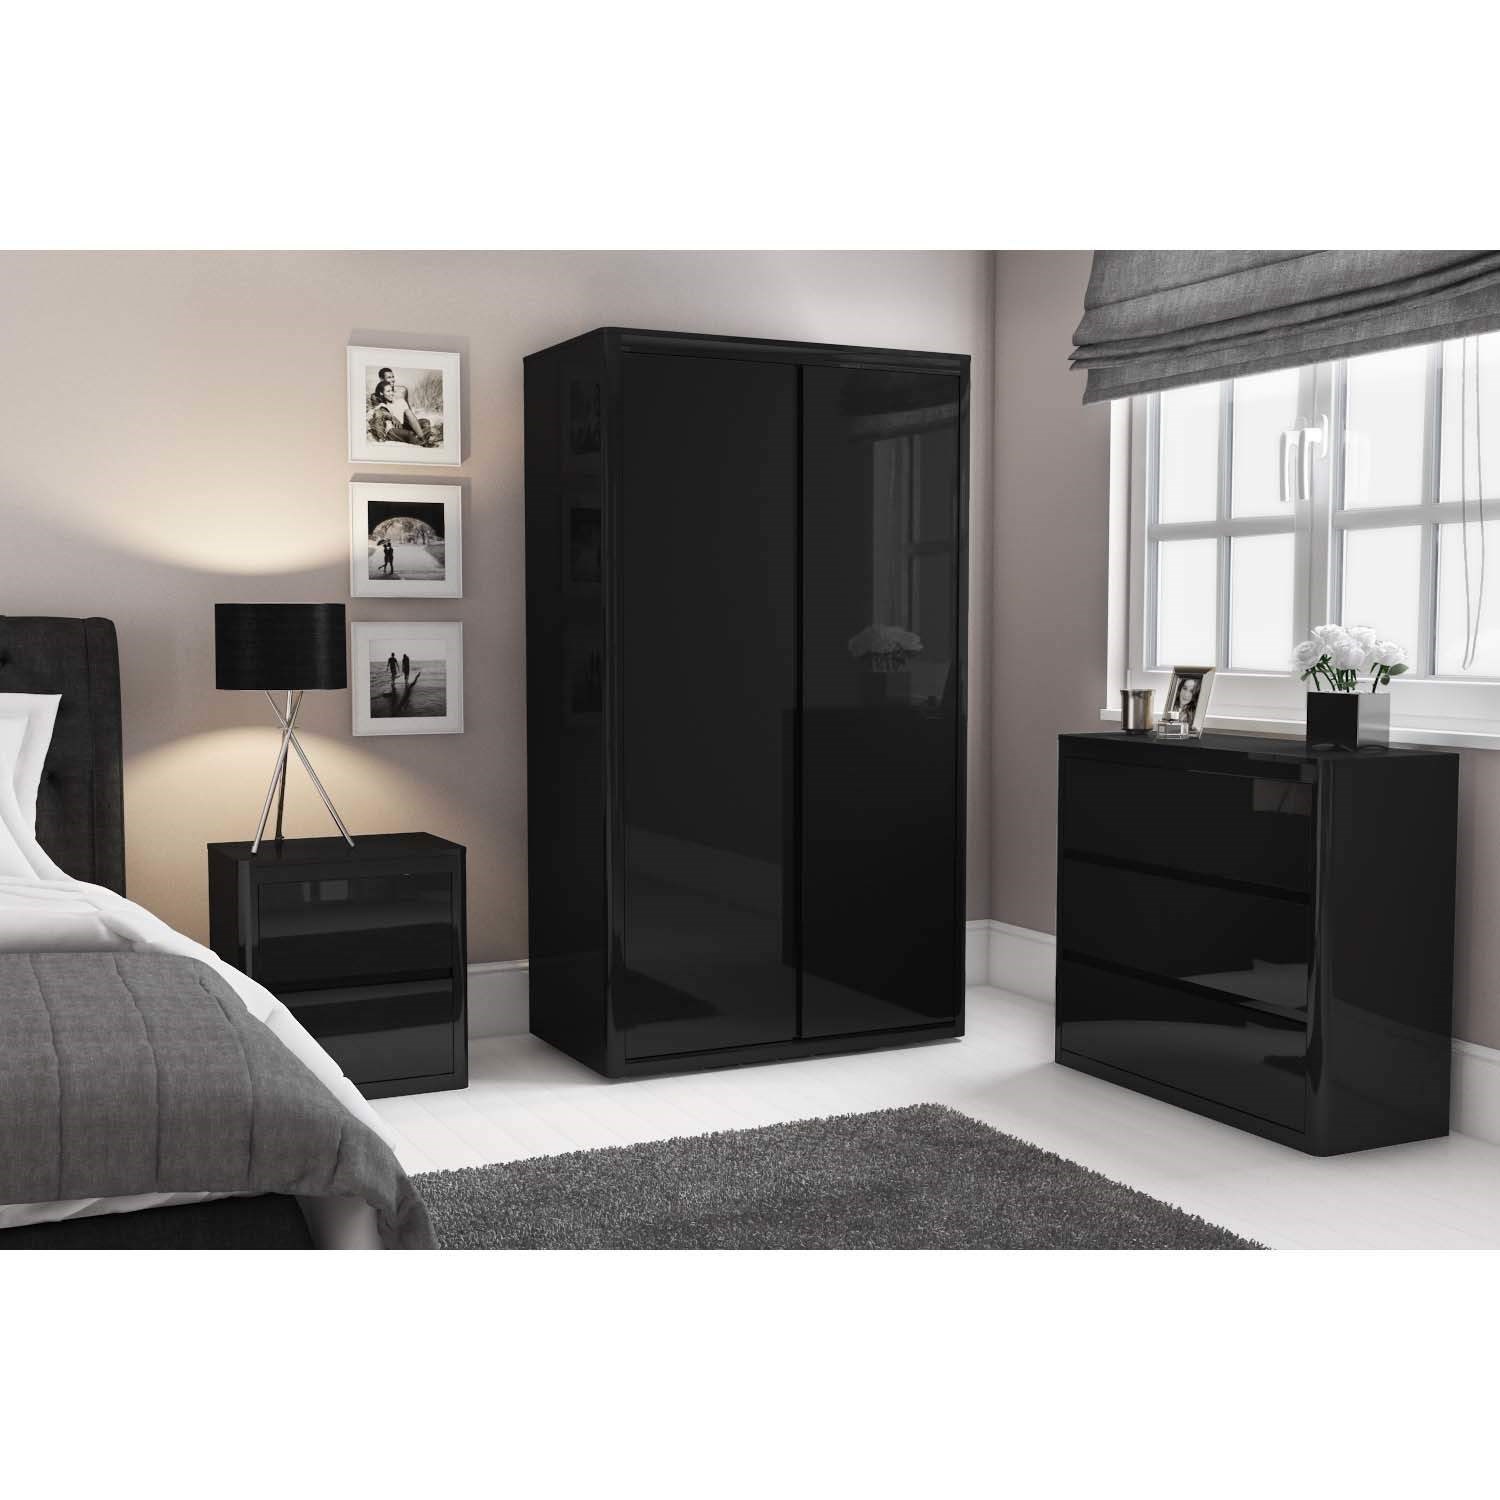 bedroom furniture high gloss black photo - 8